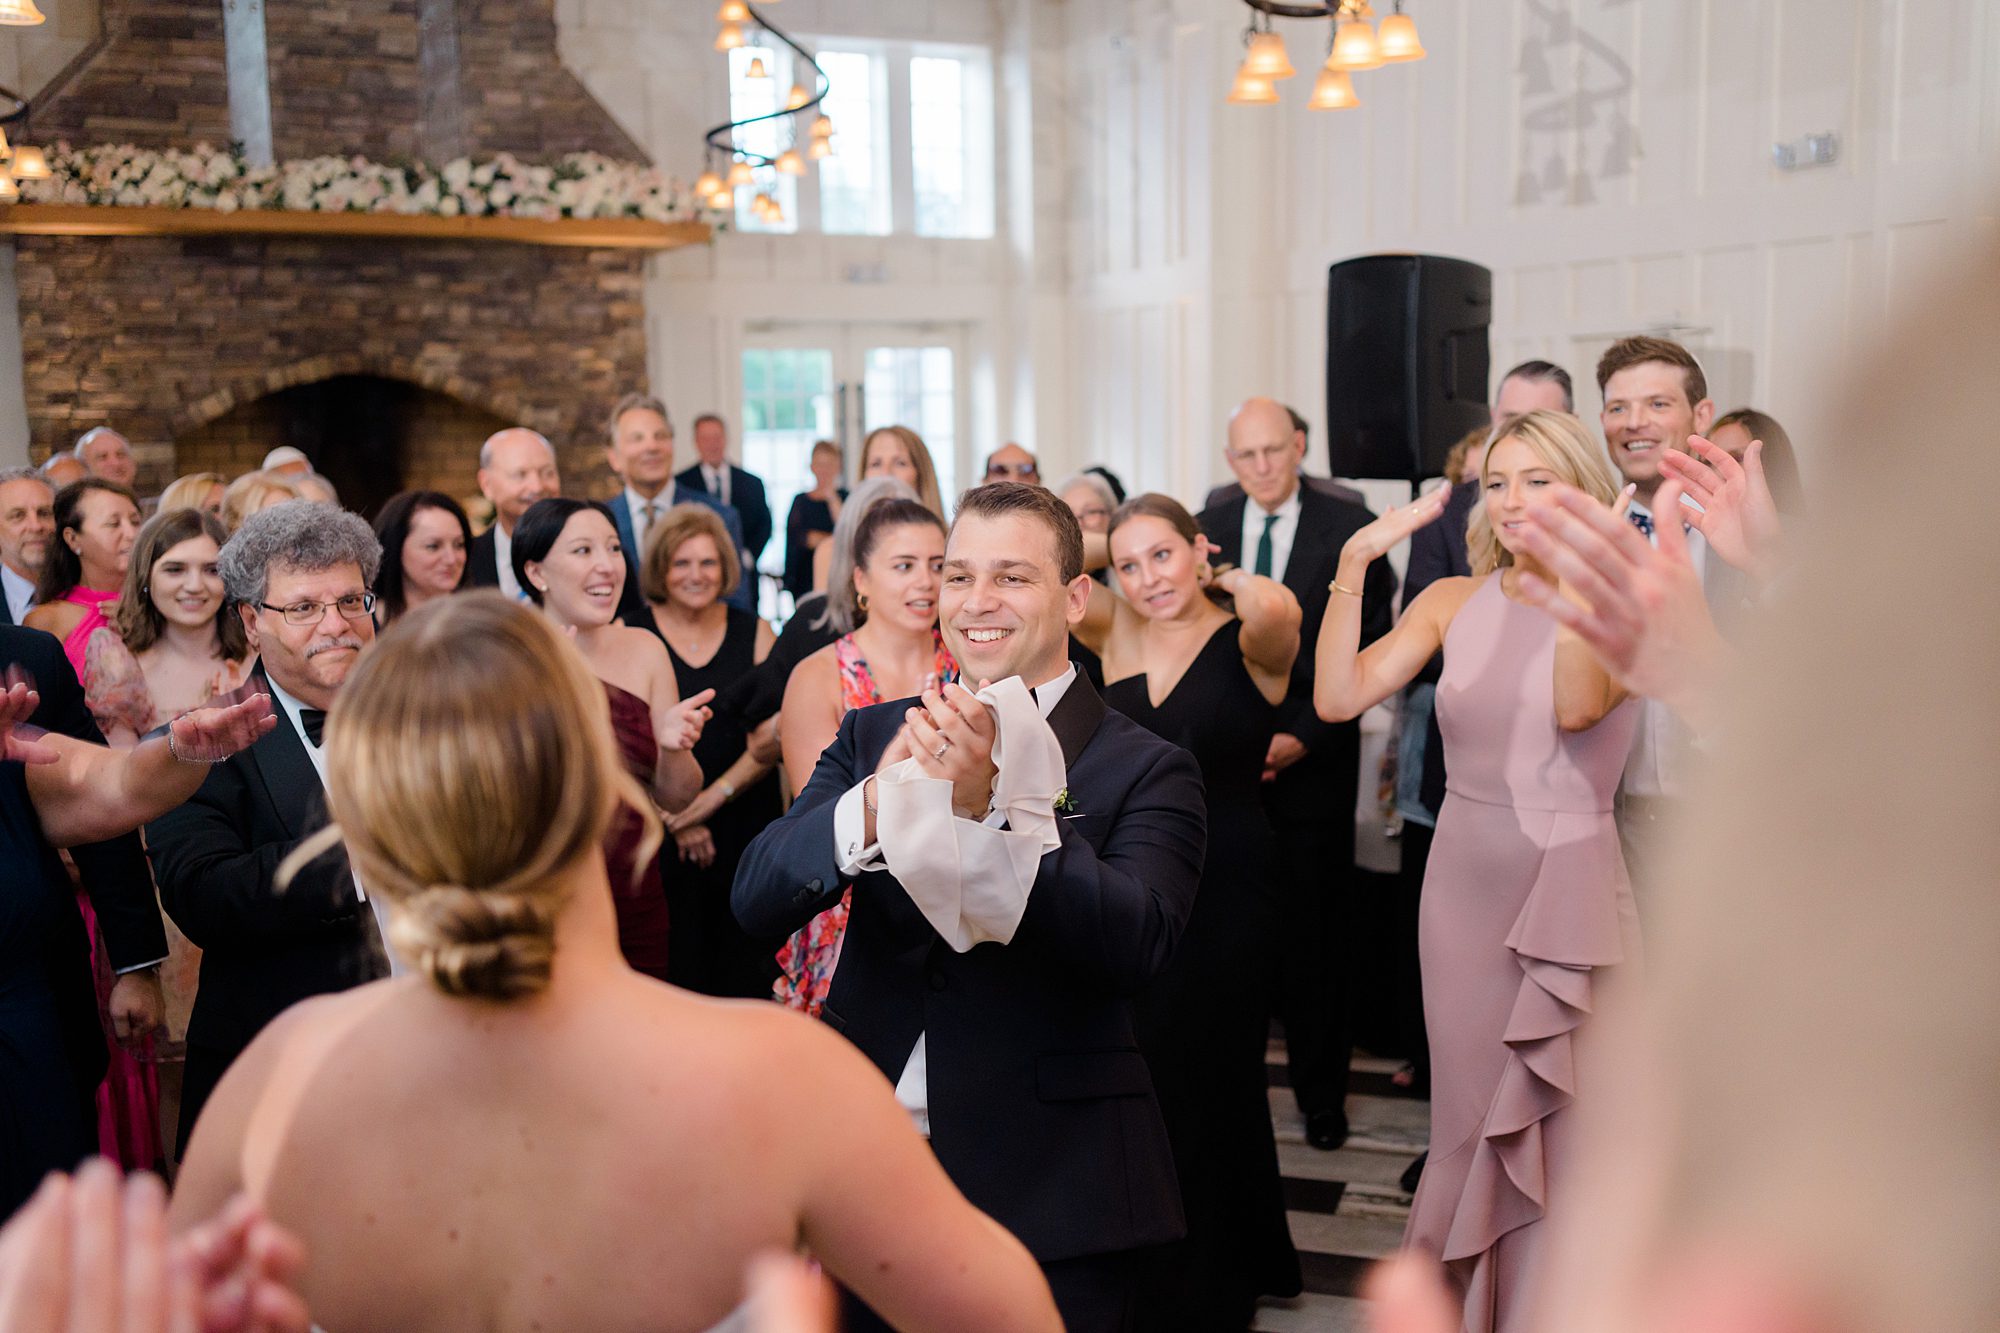 wedding guests dance around bride and groom at wedding reception 